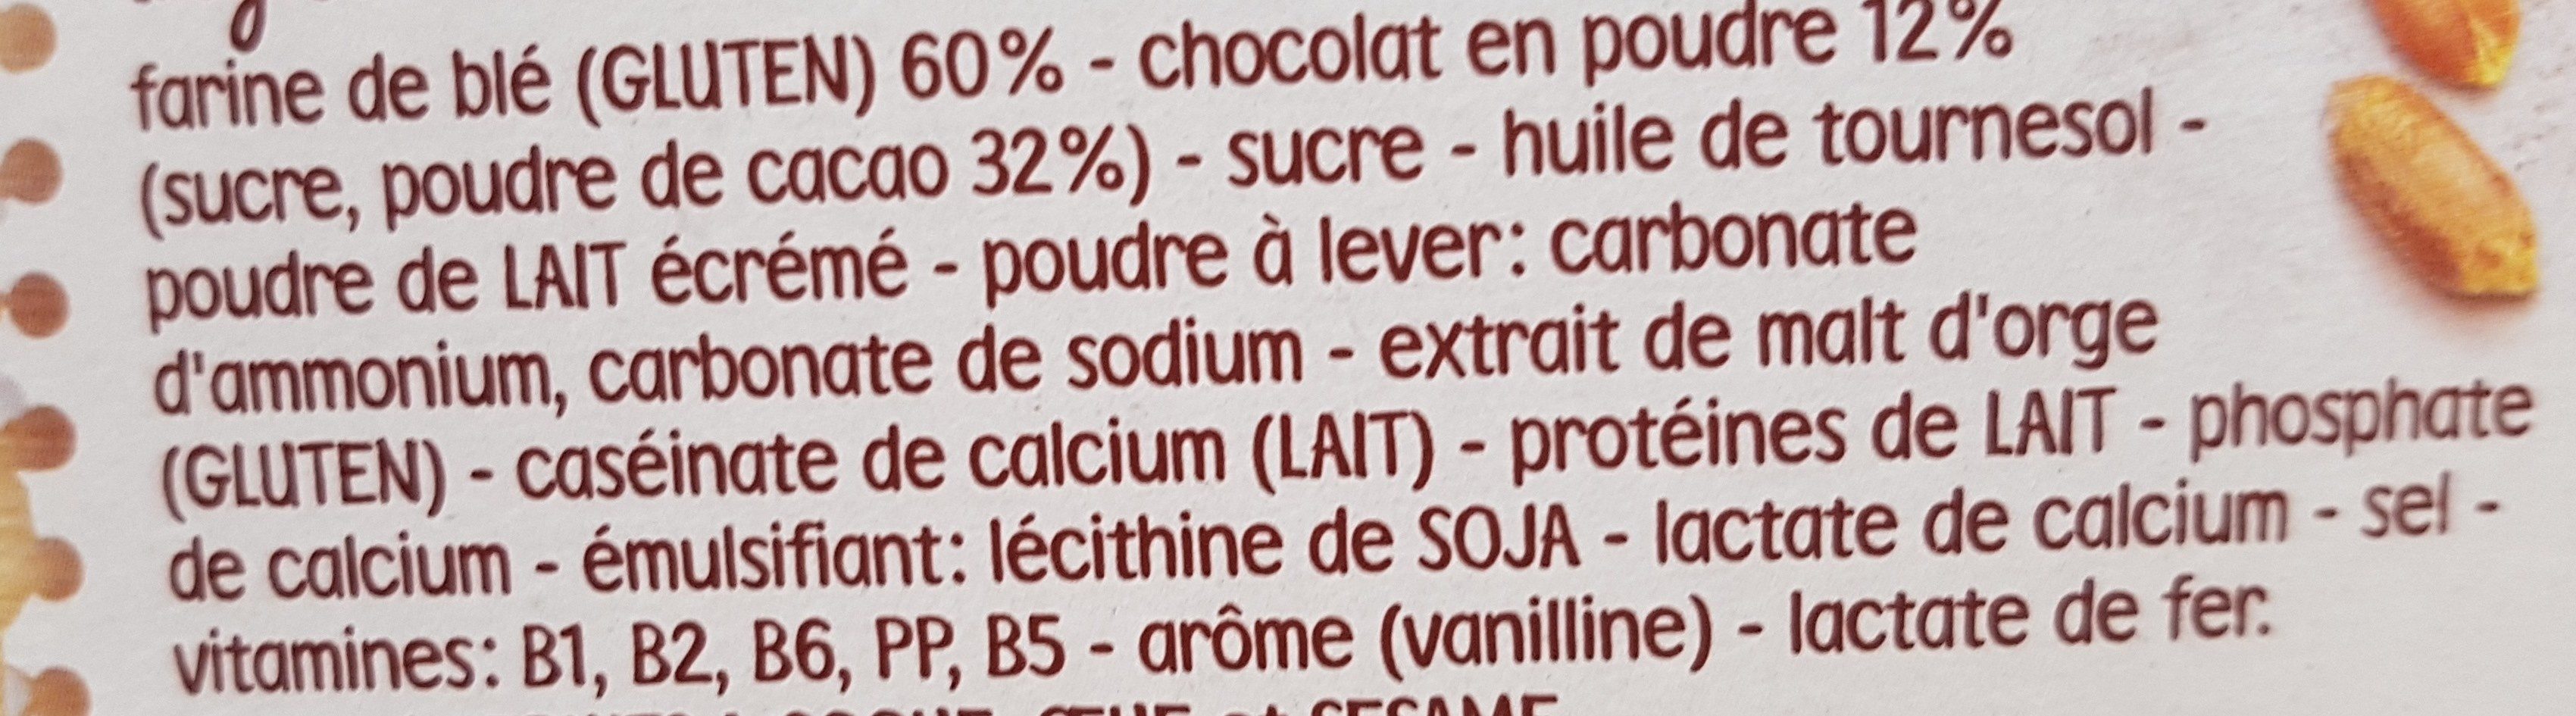 Mon 1er Biscuit au Chocolat - Ingredients - fr